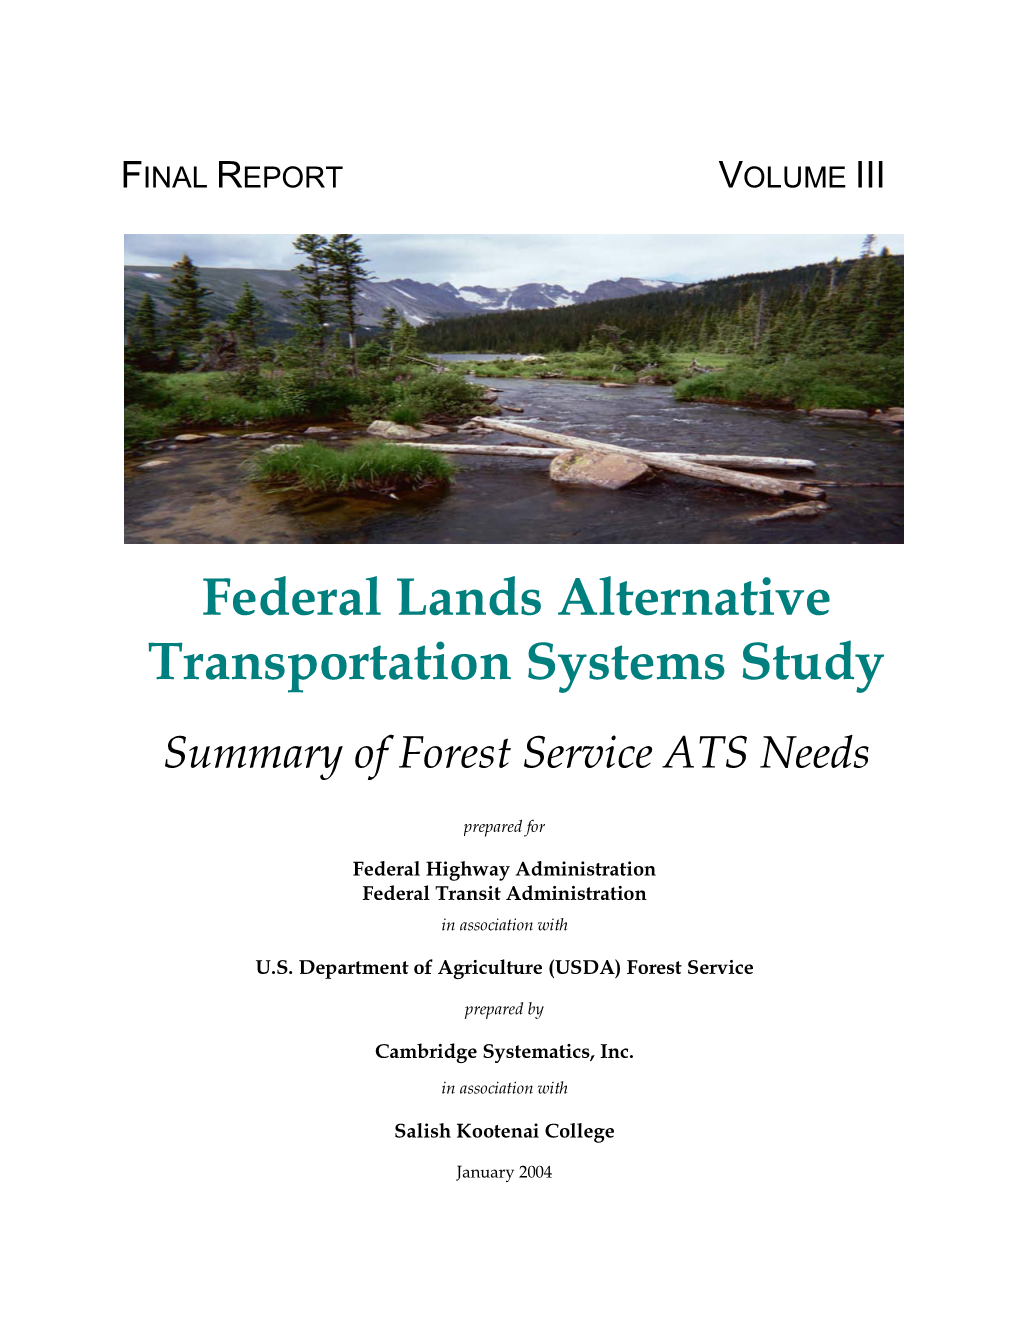 Federal Lands Alternative: Transportation Systems Study